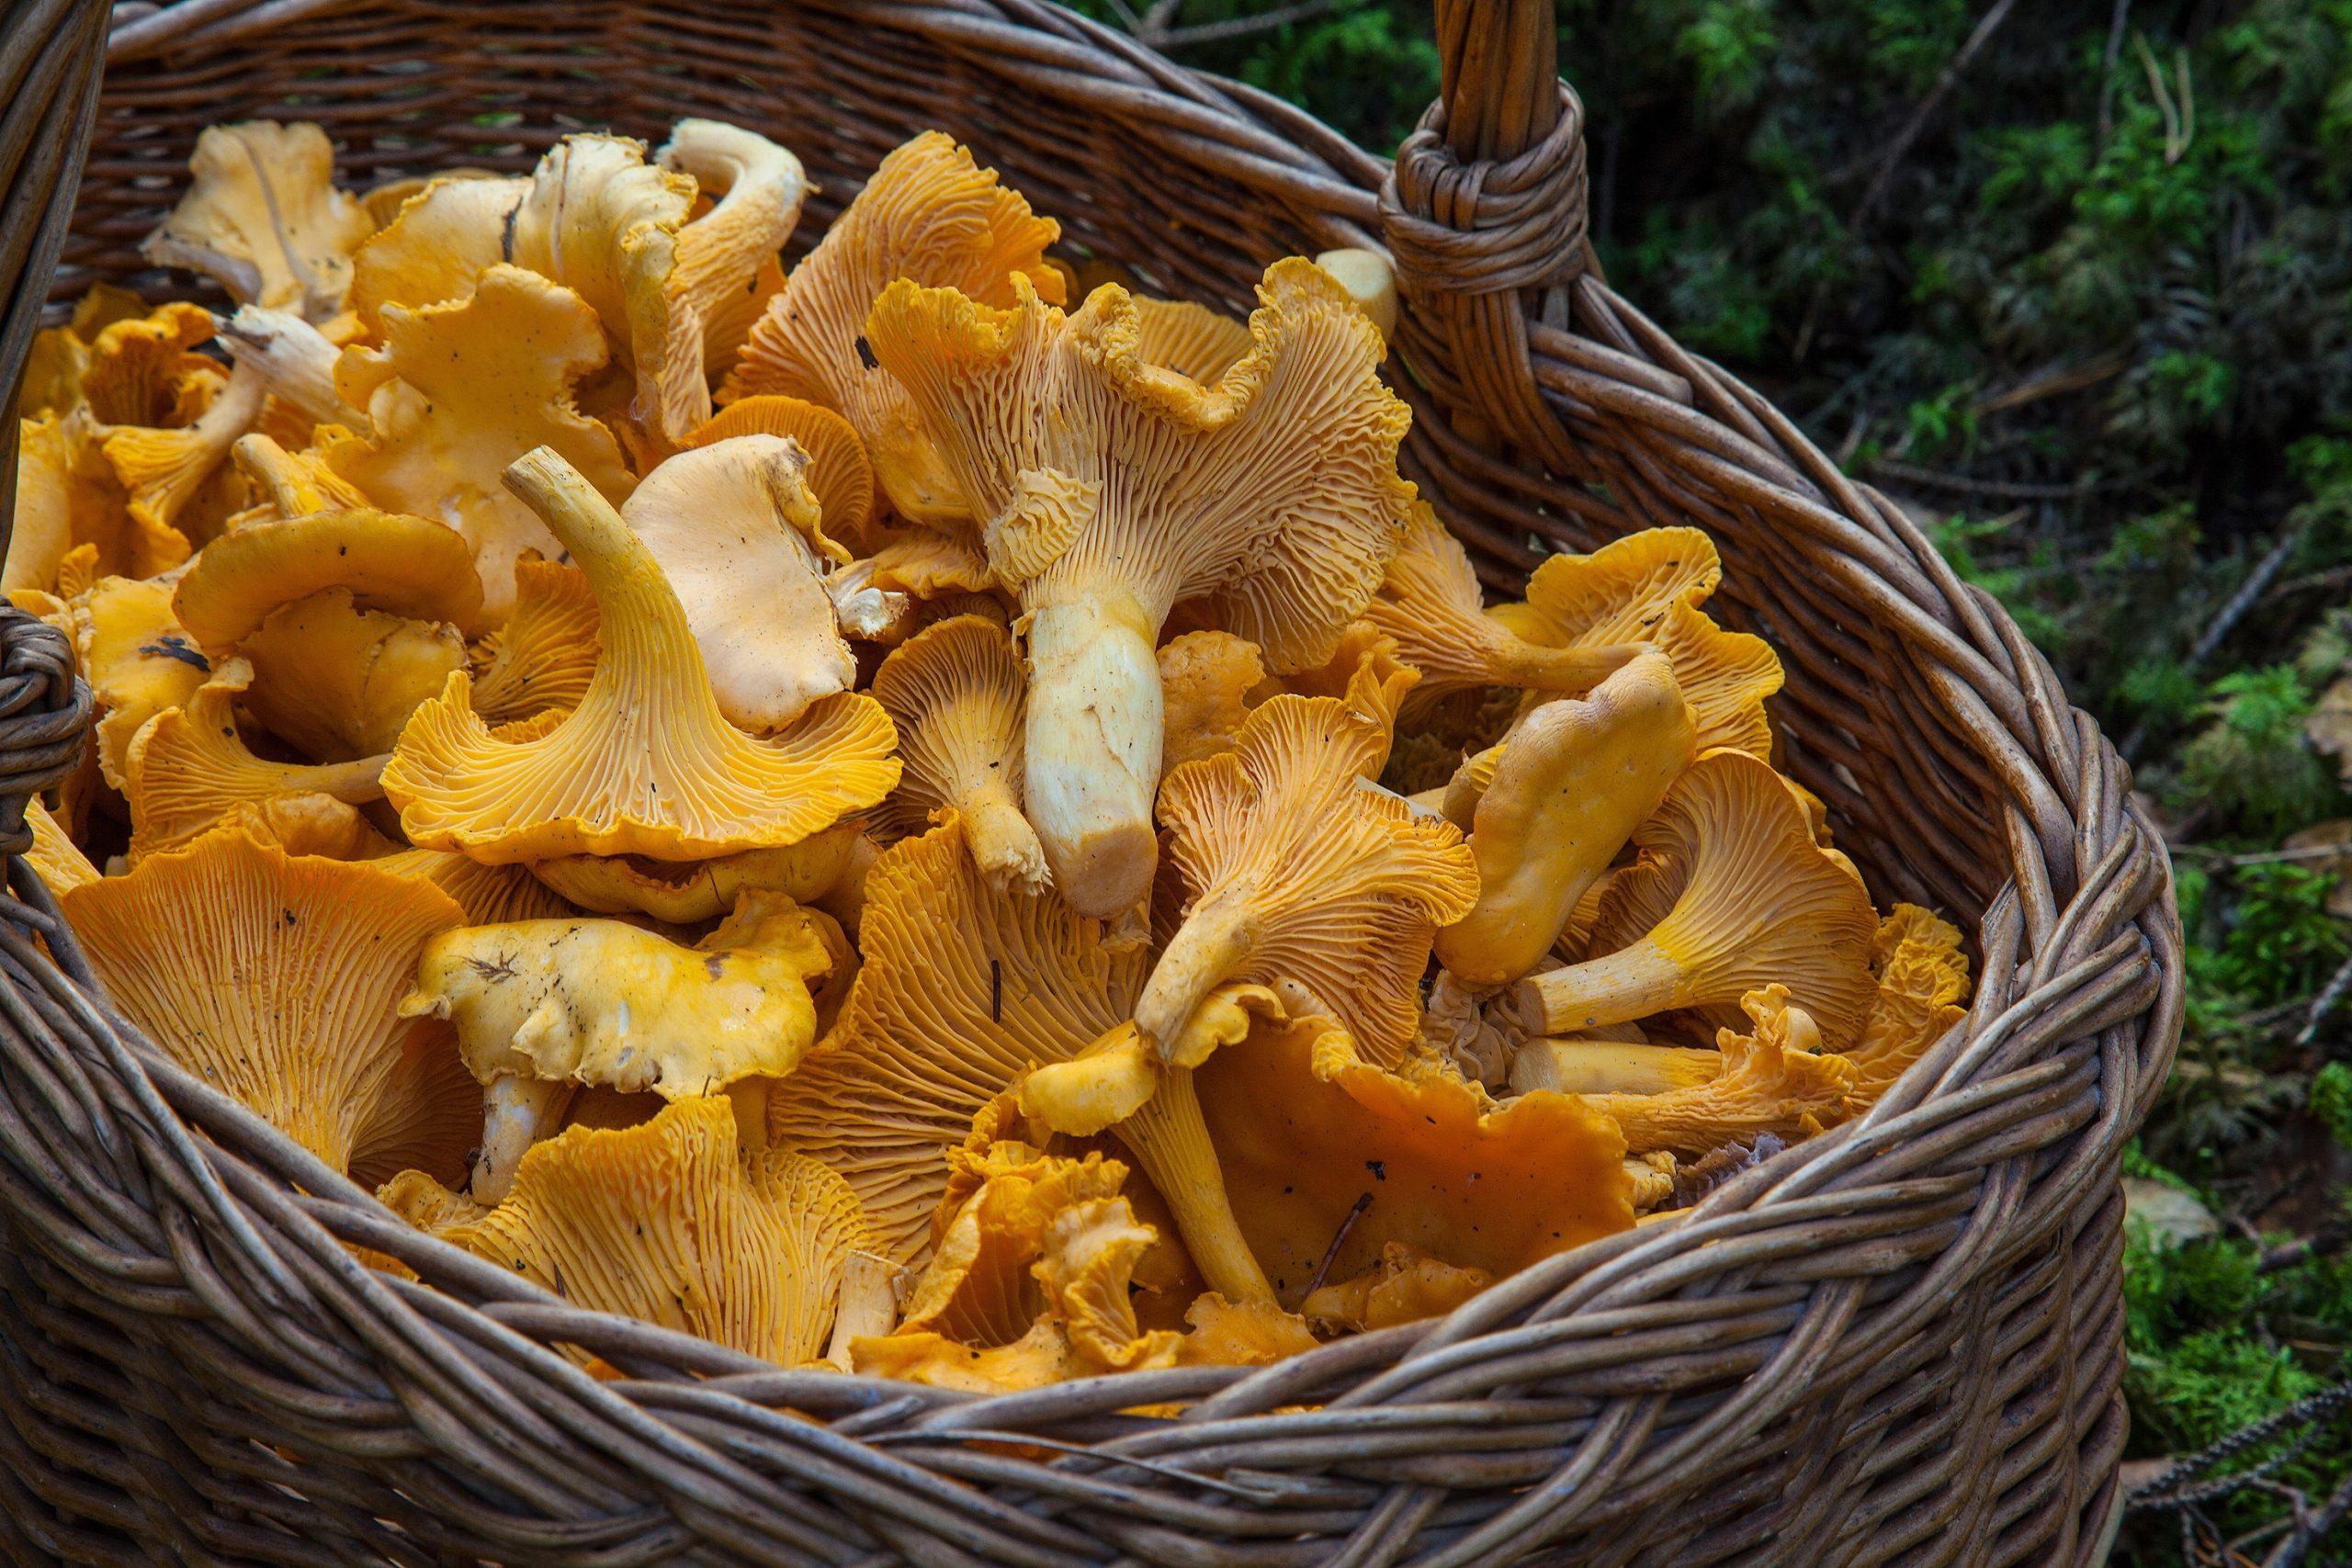 Mushroom Supplements 101: Health Benefits of Mushrooms